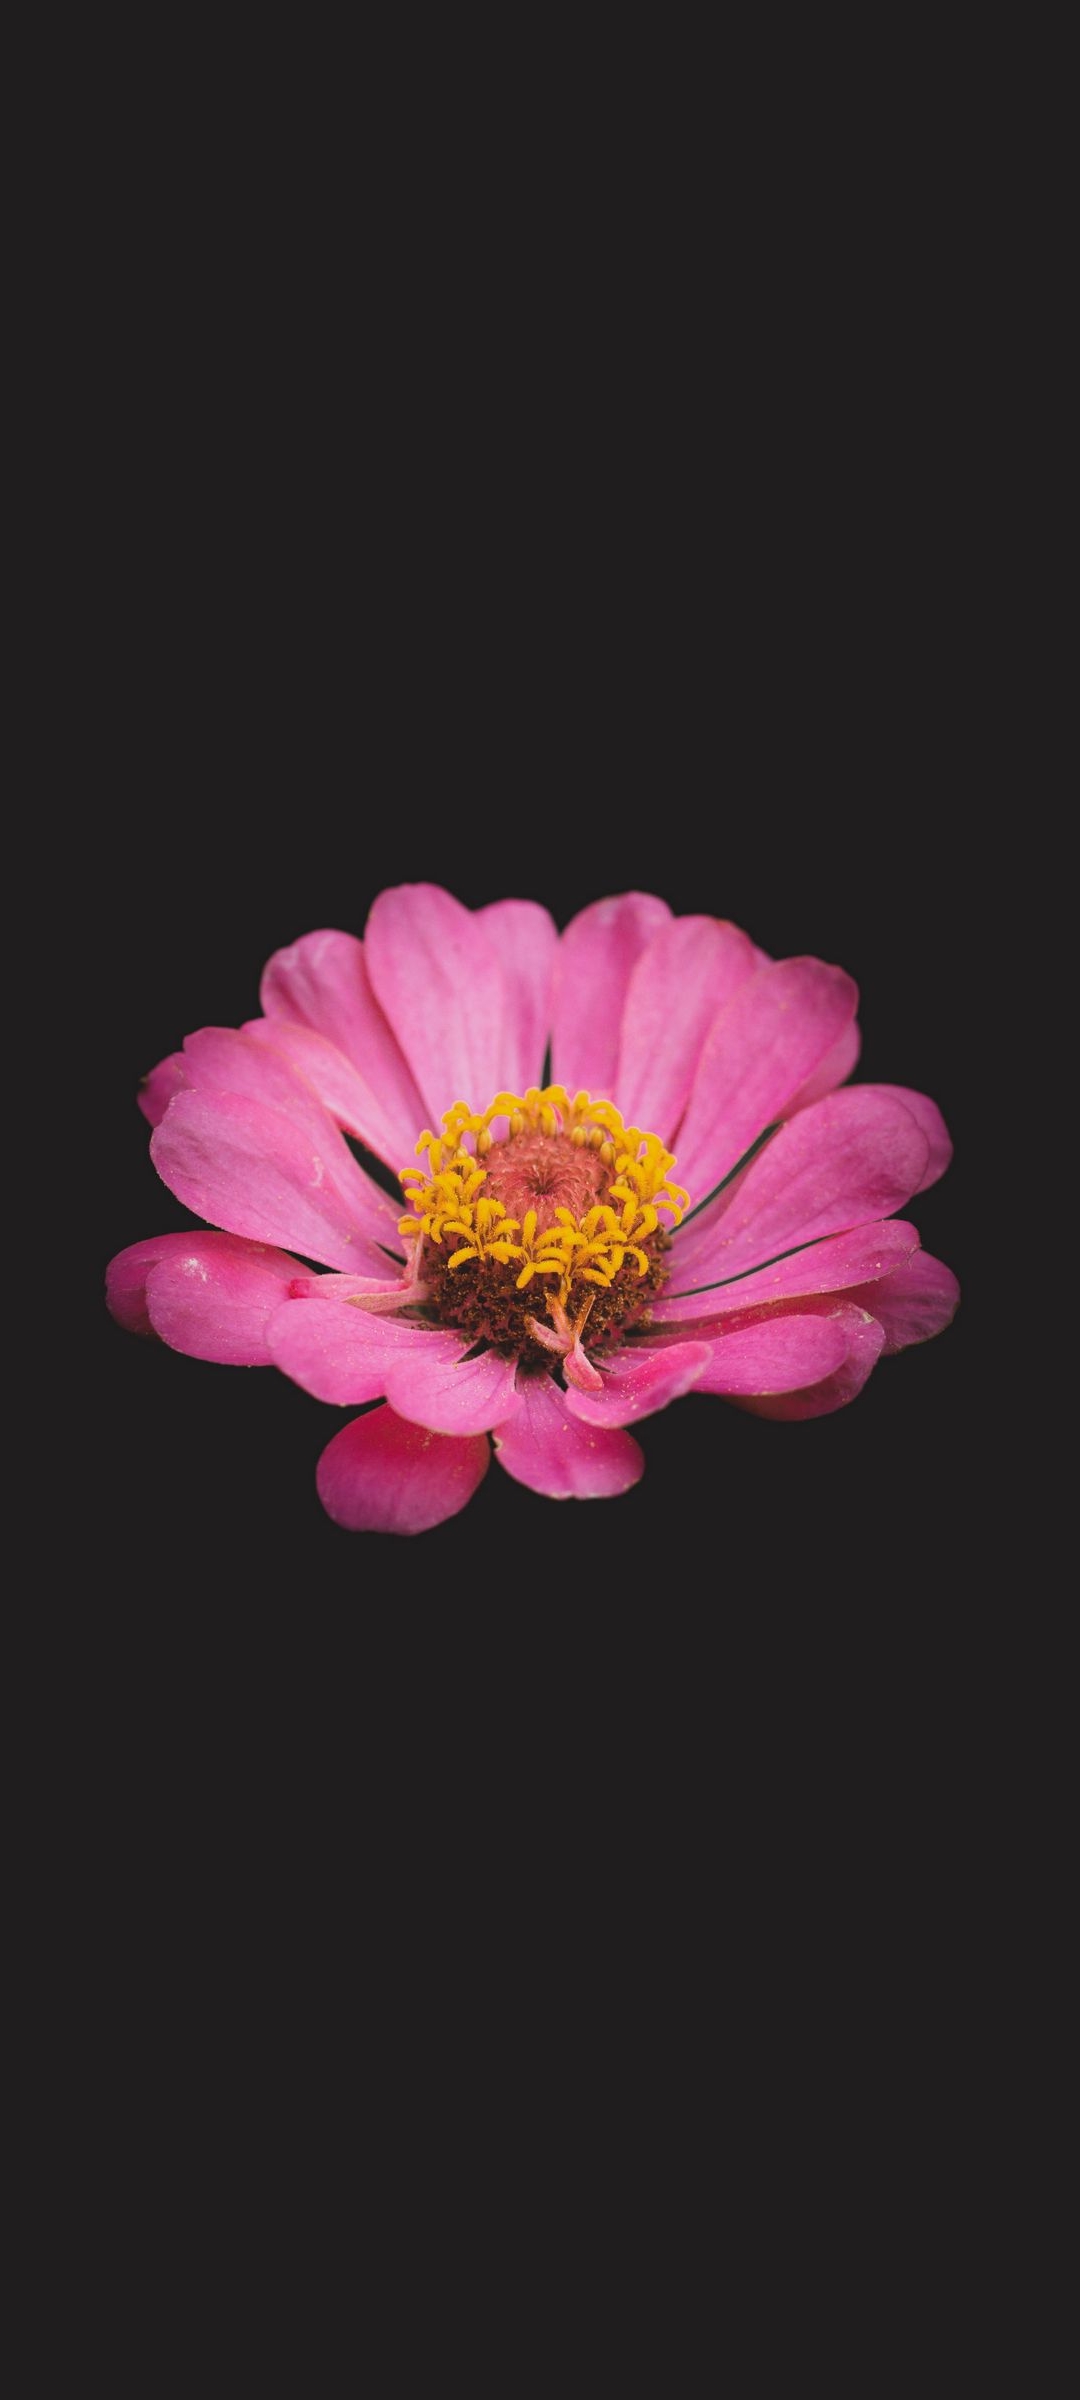 HD wallpaper Apple iOS 10 iPhone 7 Plus HD Wallpaper 02 pink dahlia flower   Wallpaper Flare